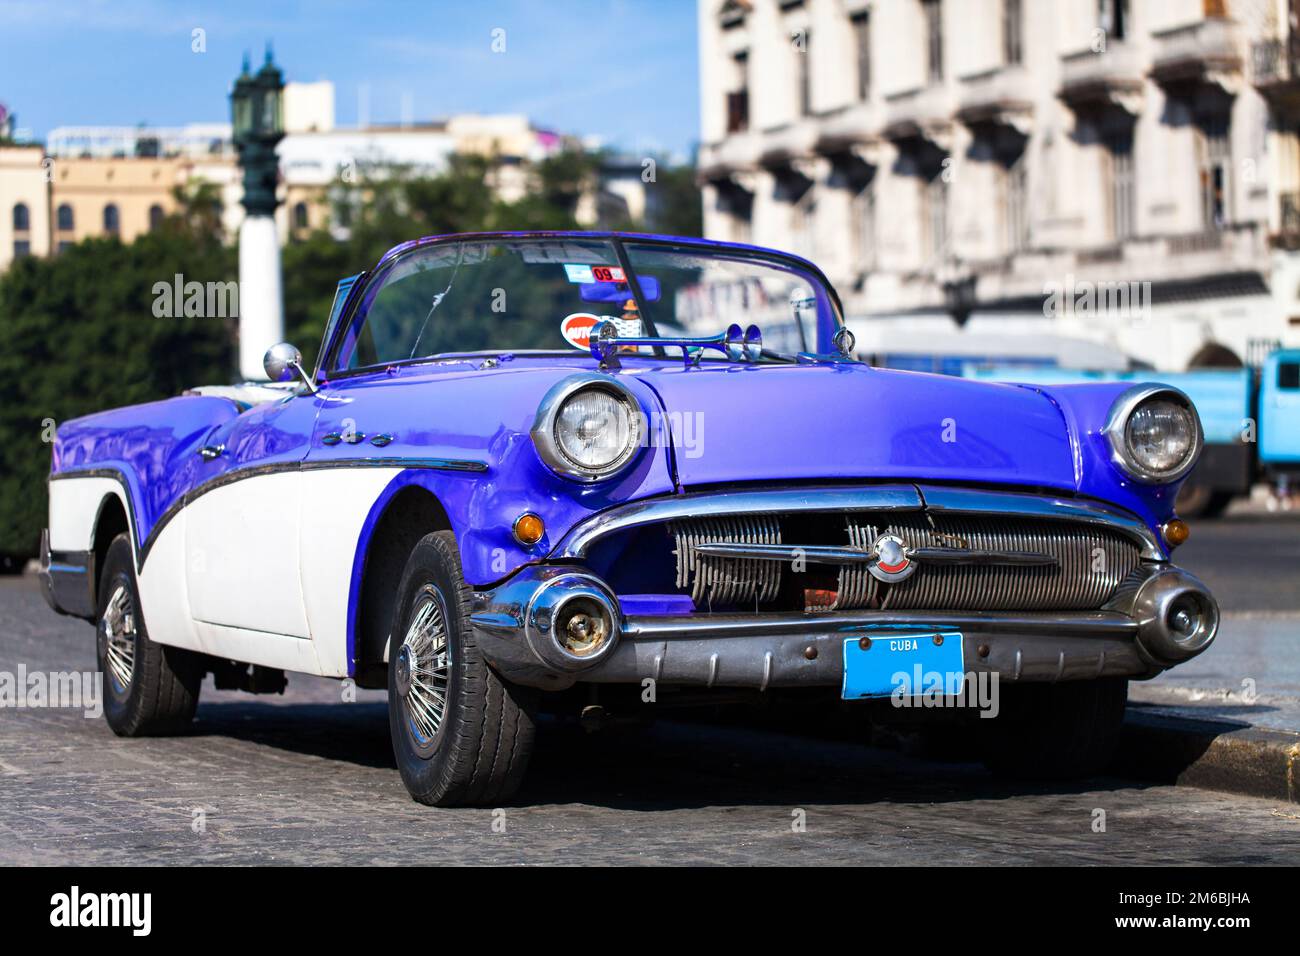 Historic American classic cars in Cuba Havana Stock Photo